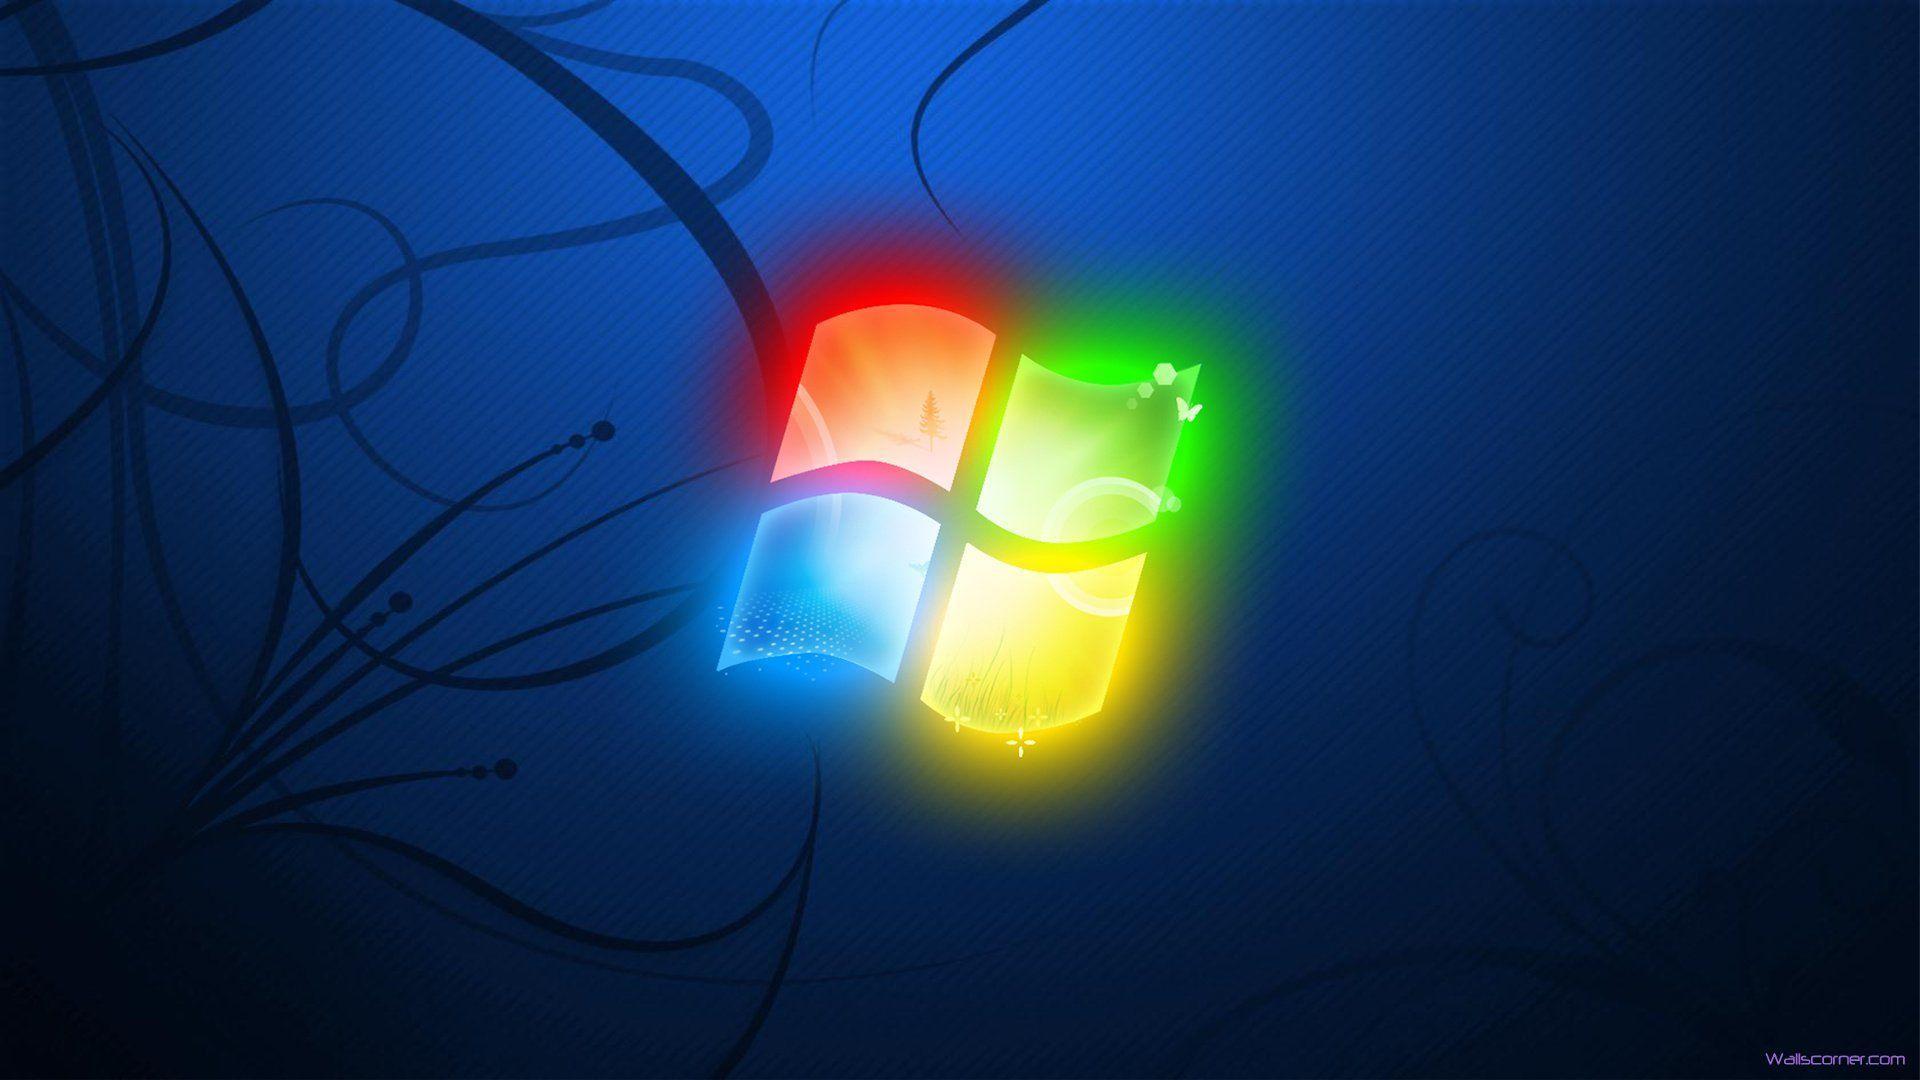 Windows 7 Fondos de pantalla 1920x1080 - Fondos de pantalla Cueva